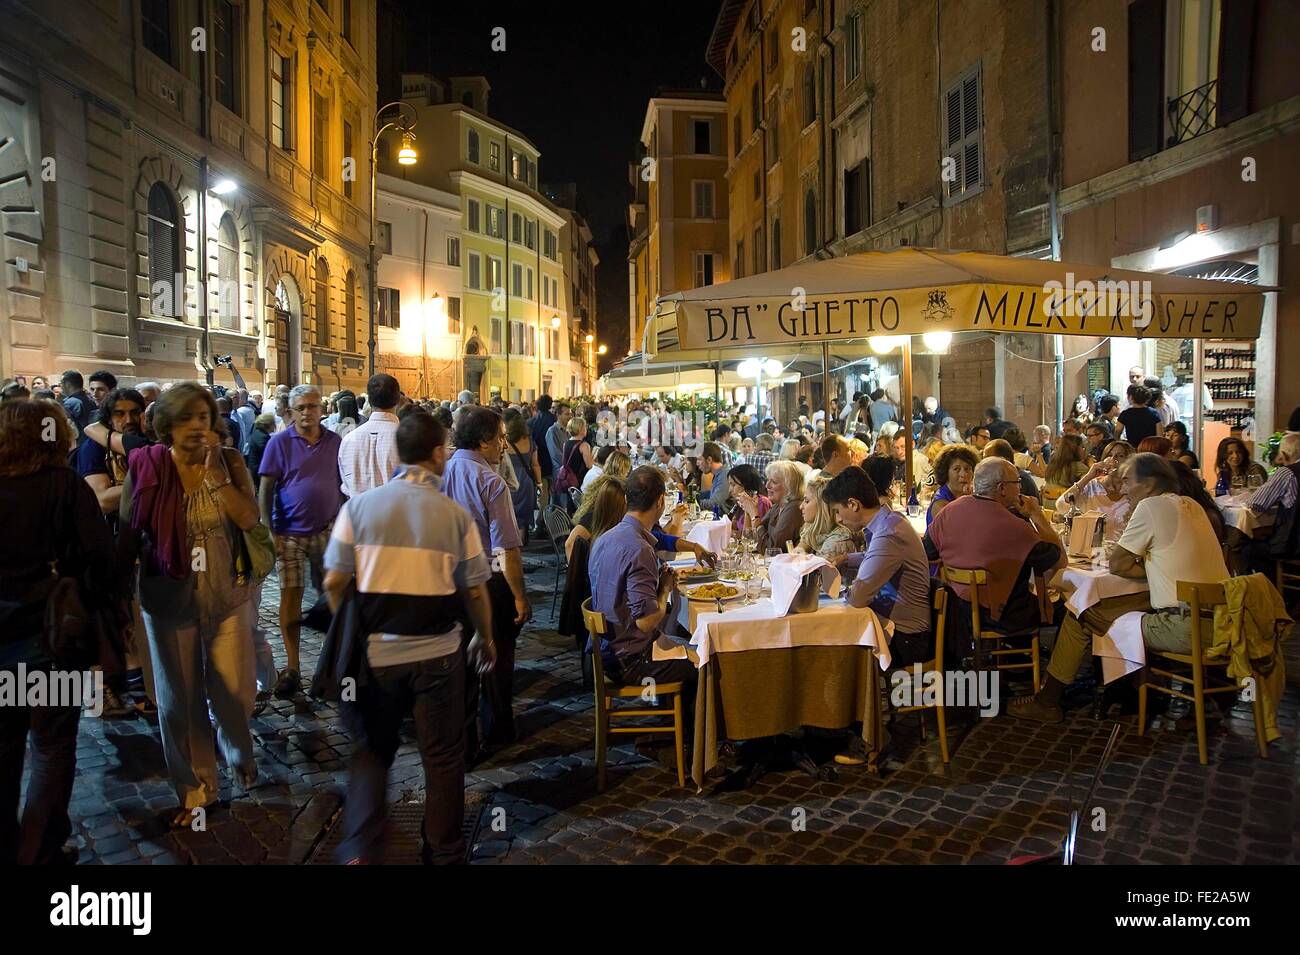 "Bar Ghetto" Restaurant im jüdischen Viertel, das ehemalige Ghetto Rom Kredit © Fabio Mazzarella/Sintesi/Alamy Stock Photo Stockfoto